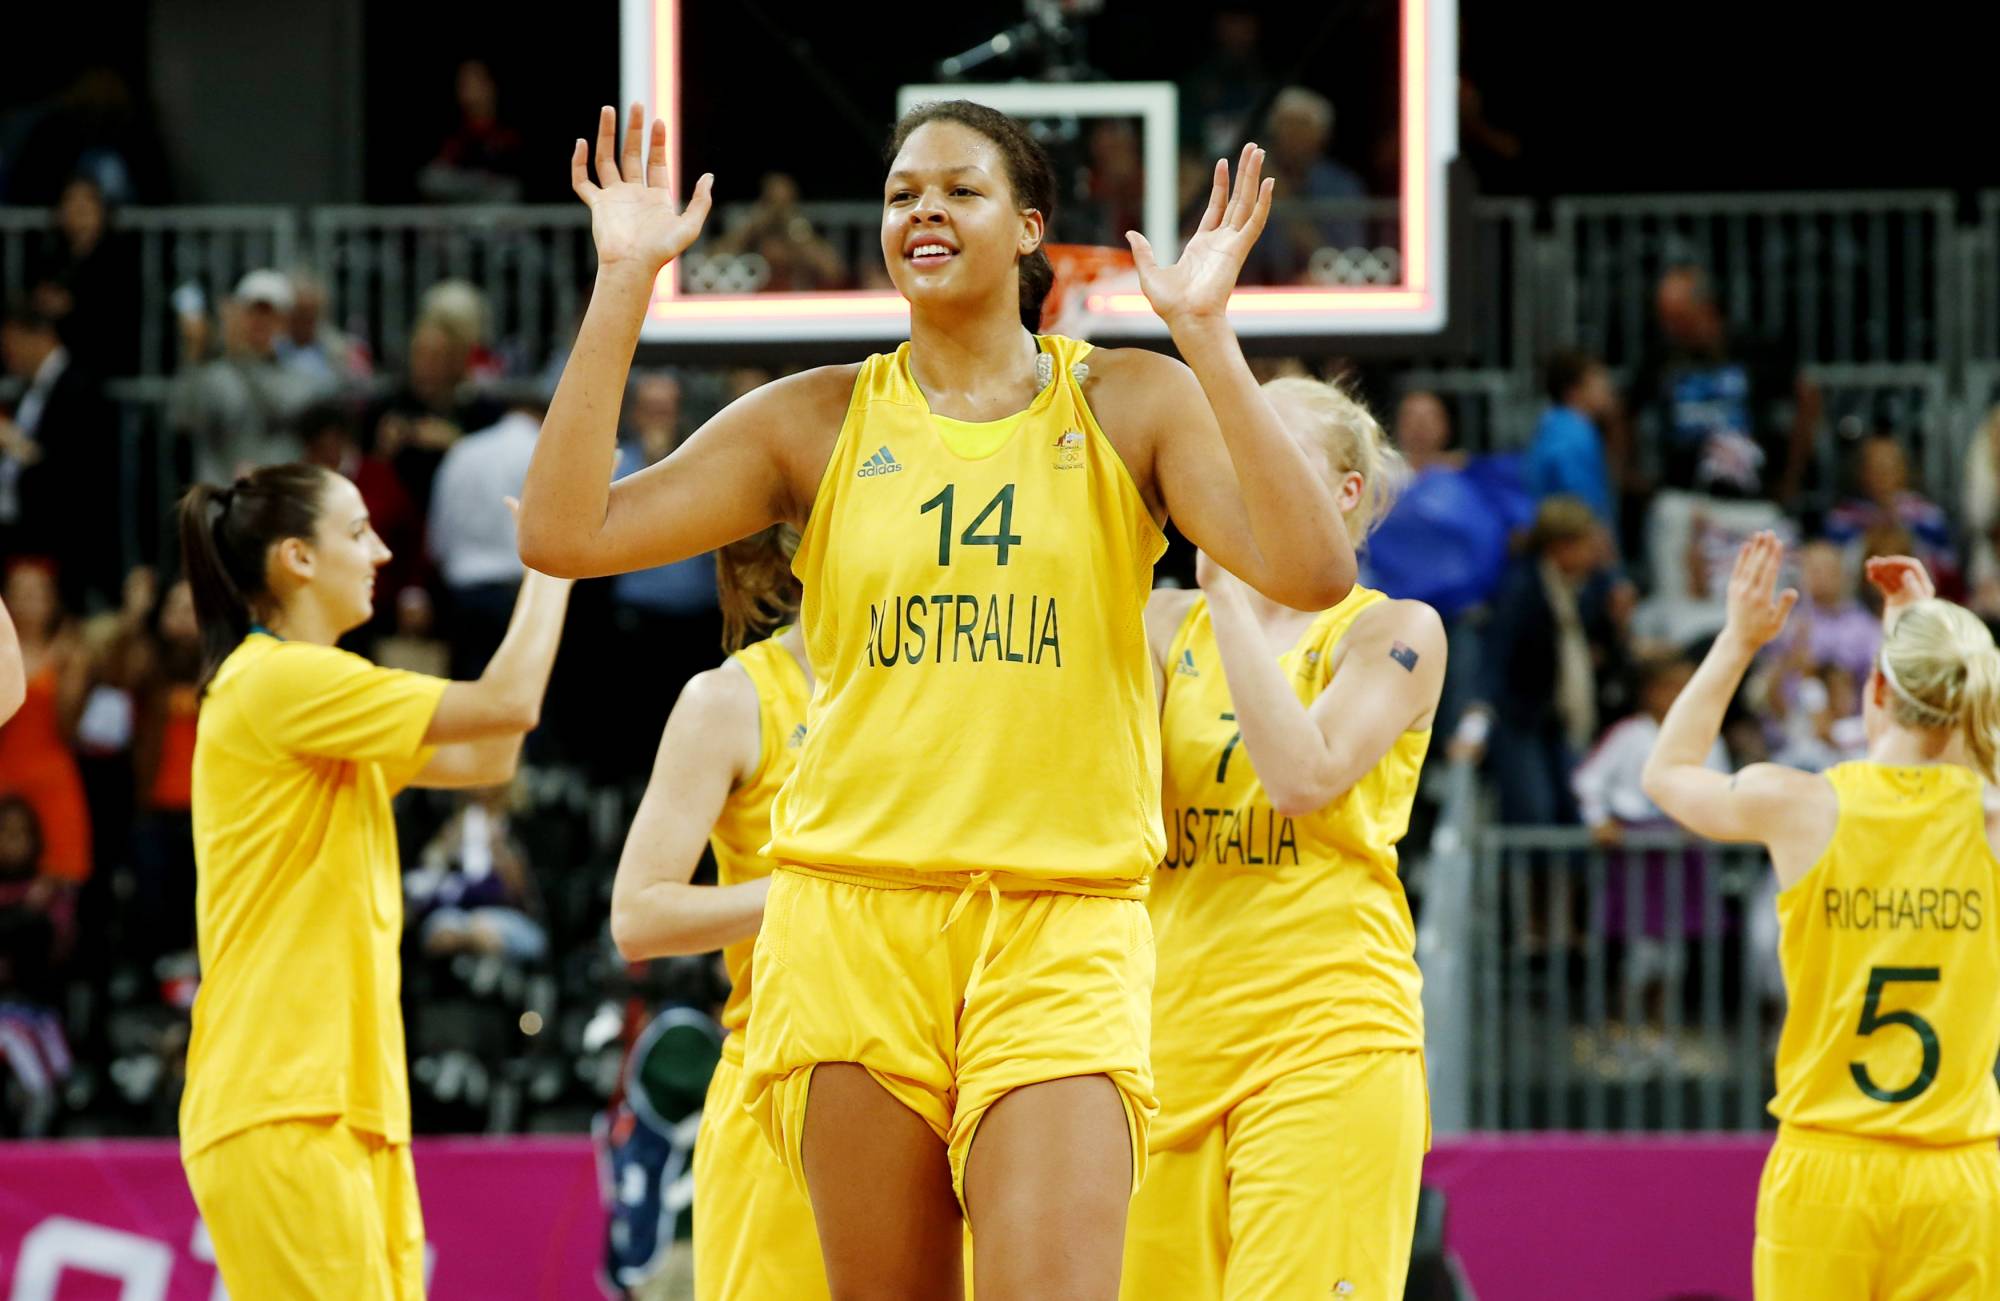 Kellie Bryan News: Liz Cambage Team Australia